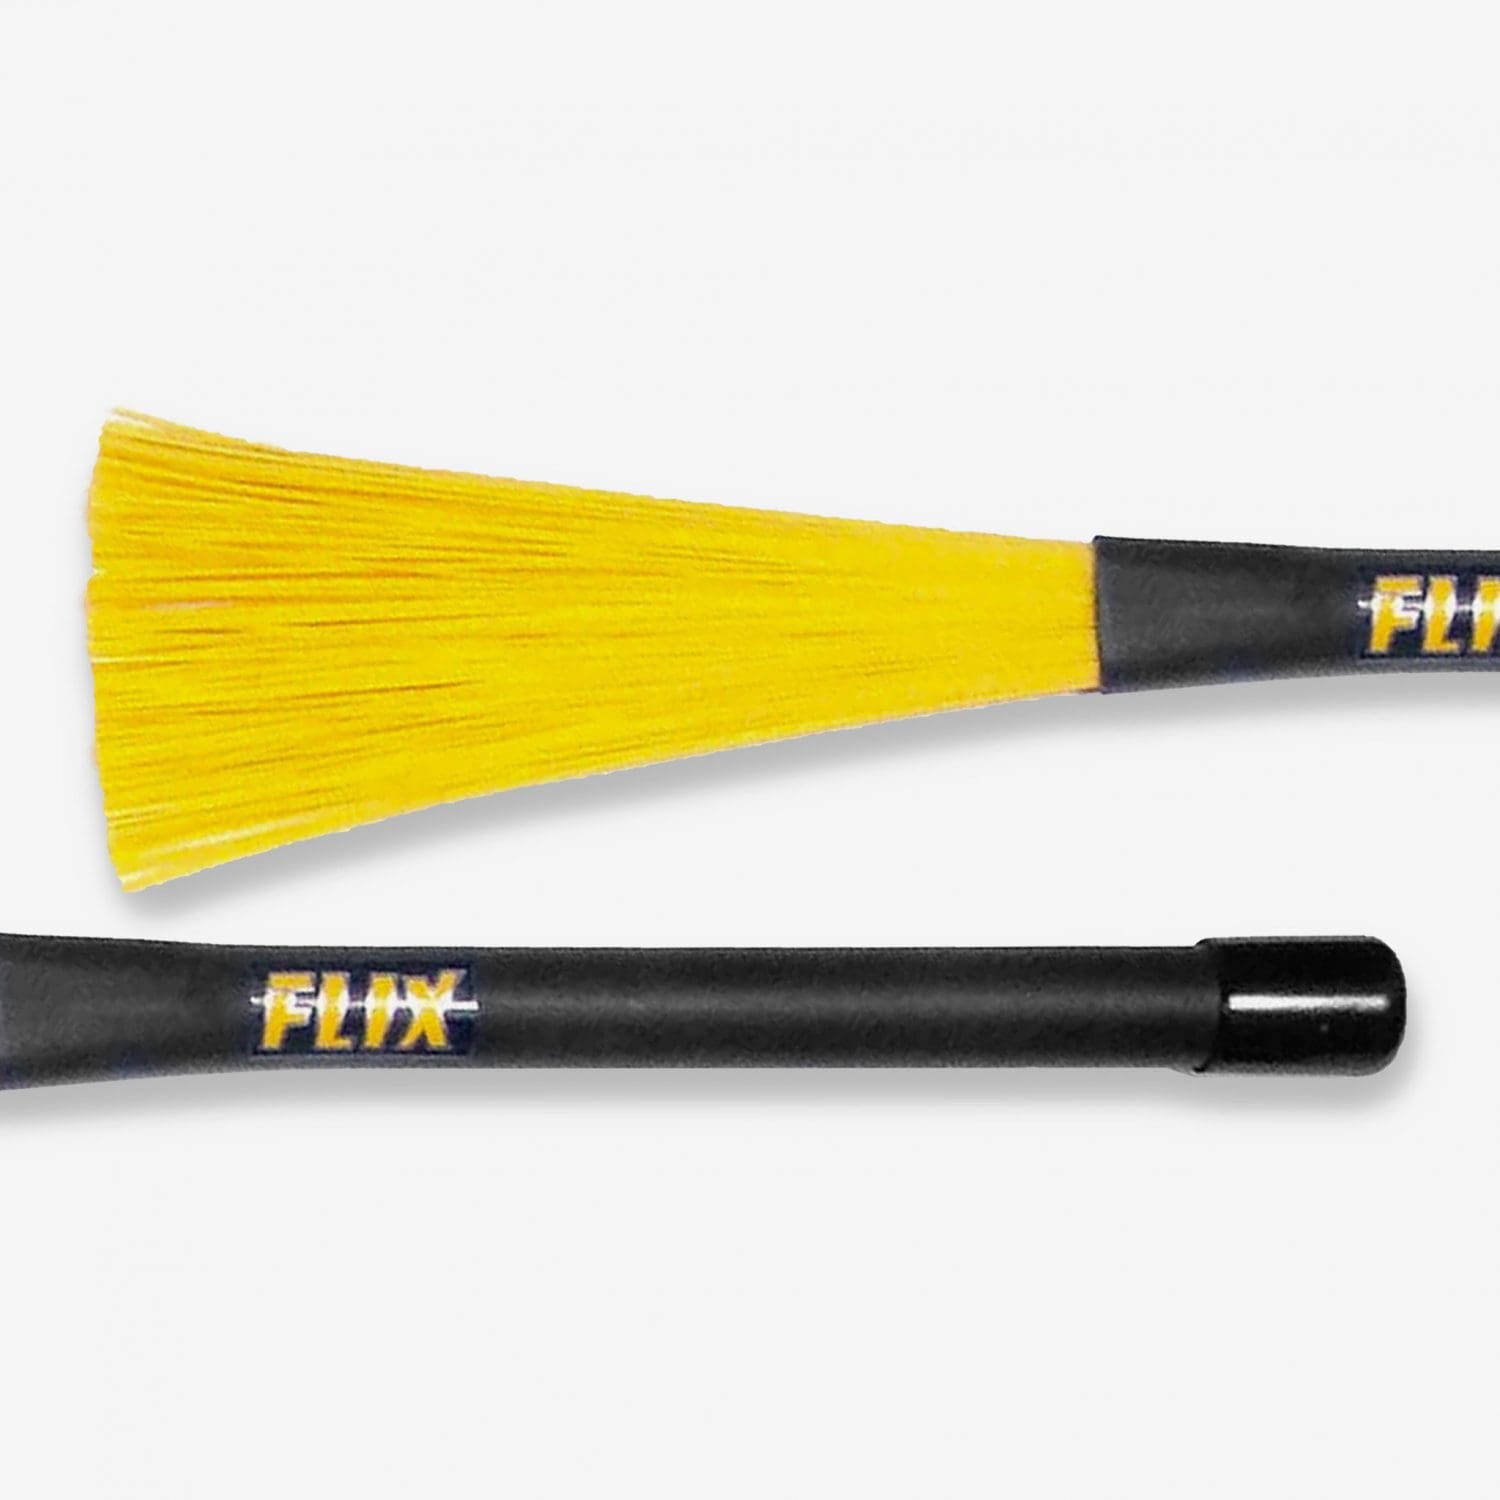 XL Classic Brushes